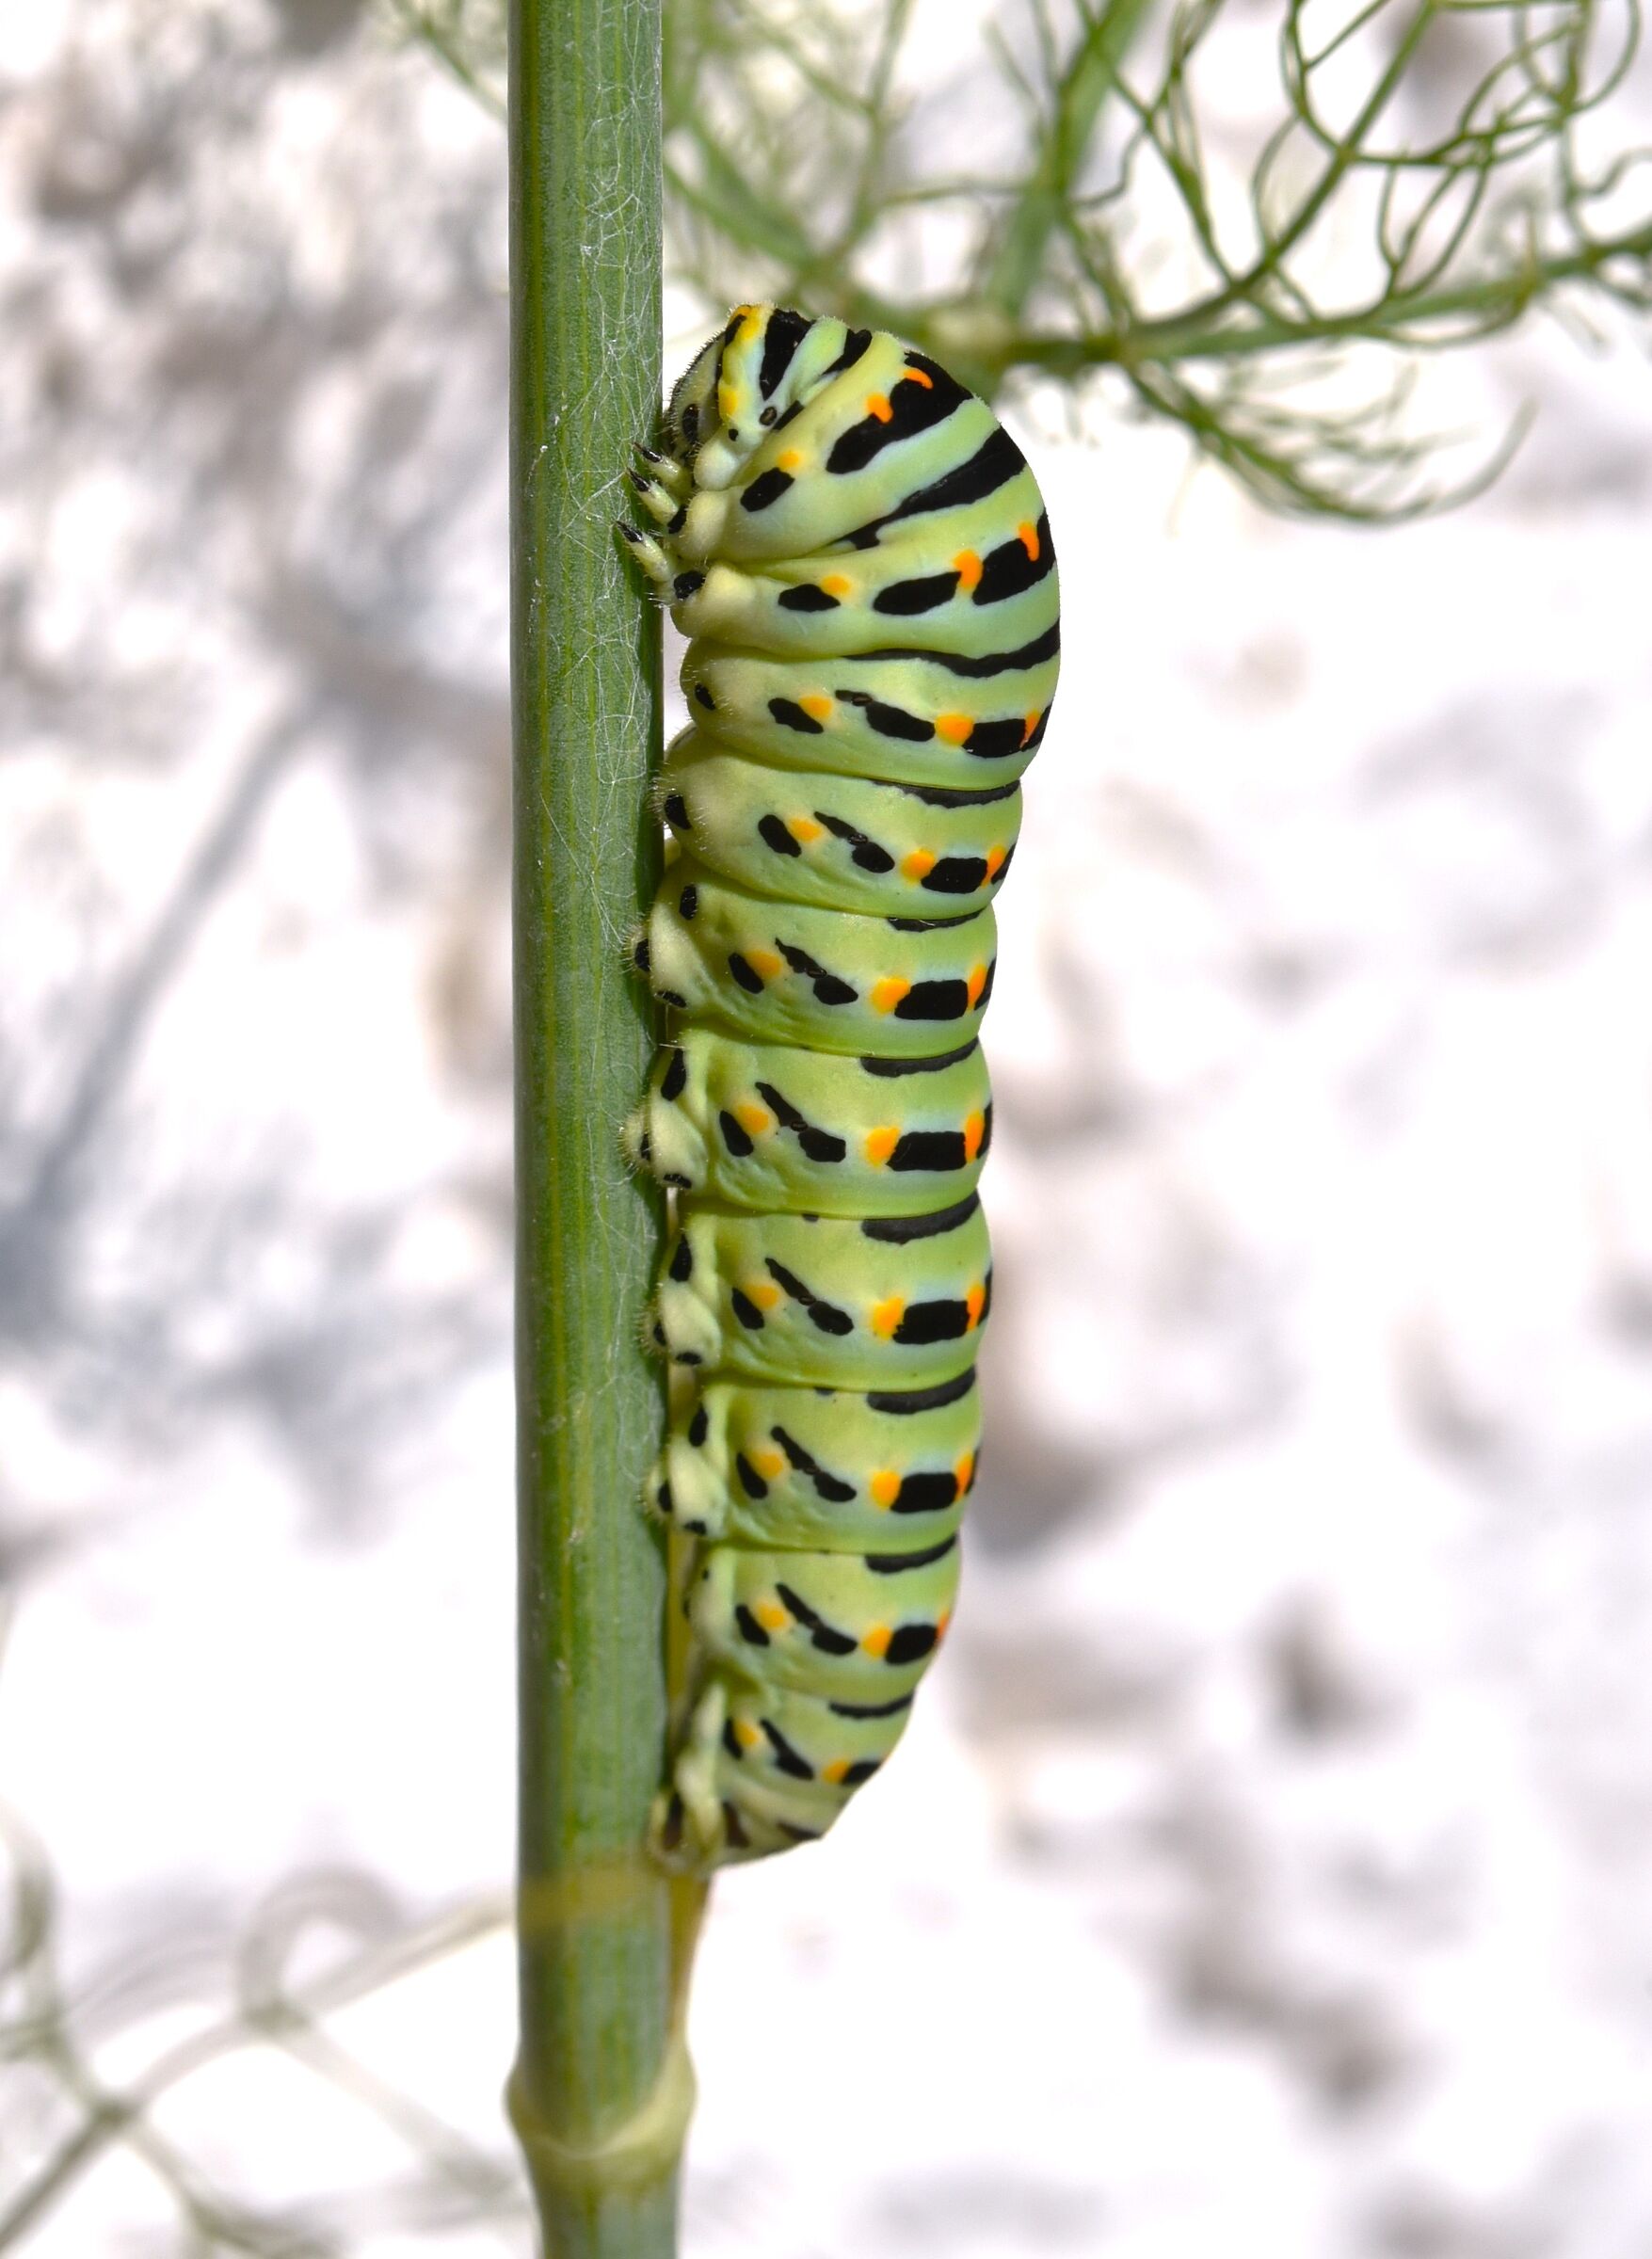 swallowtail caterpillar...